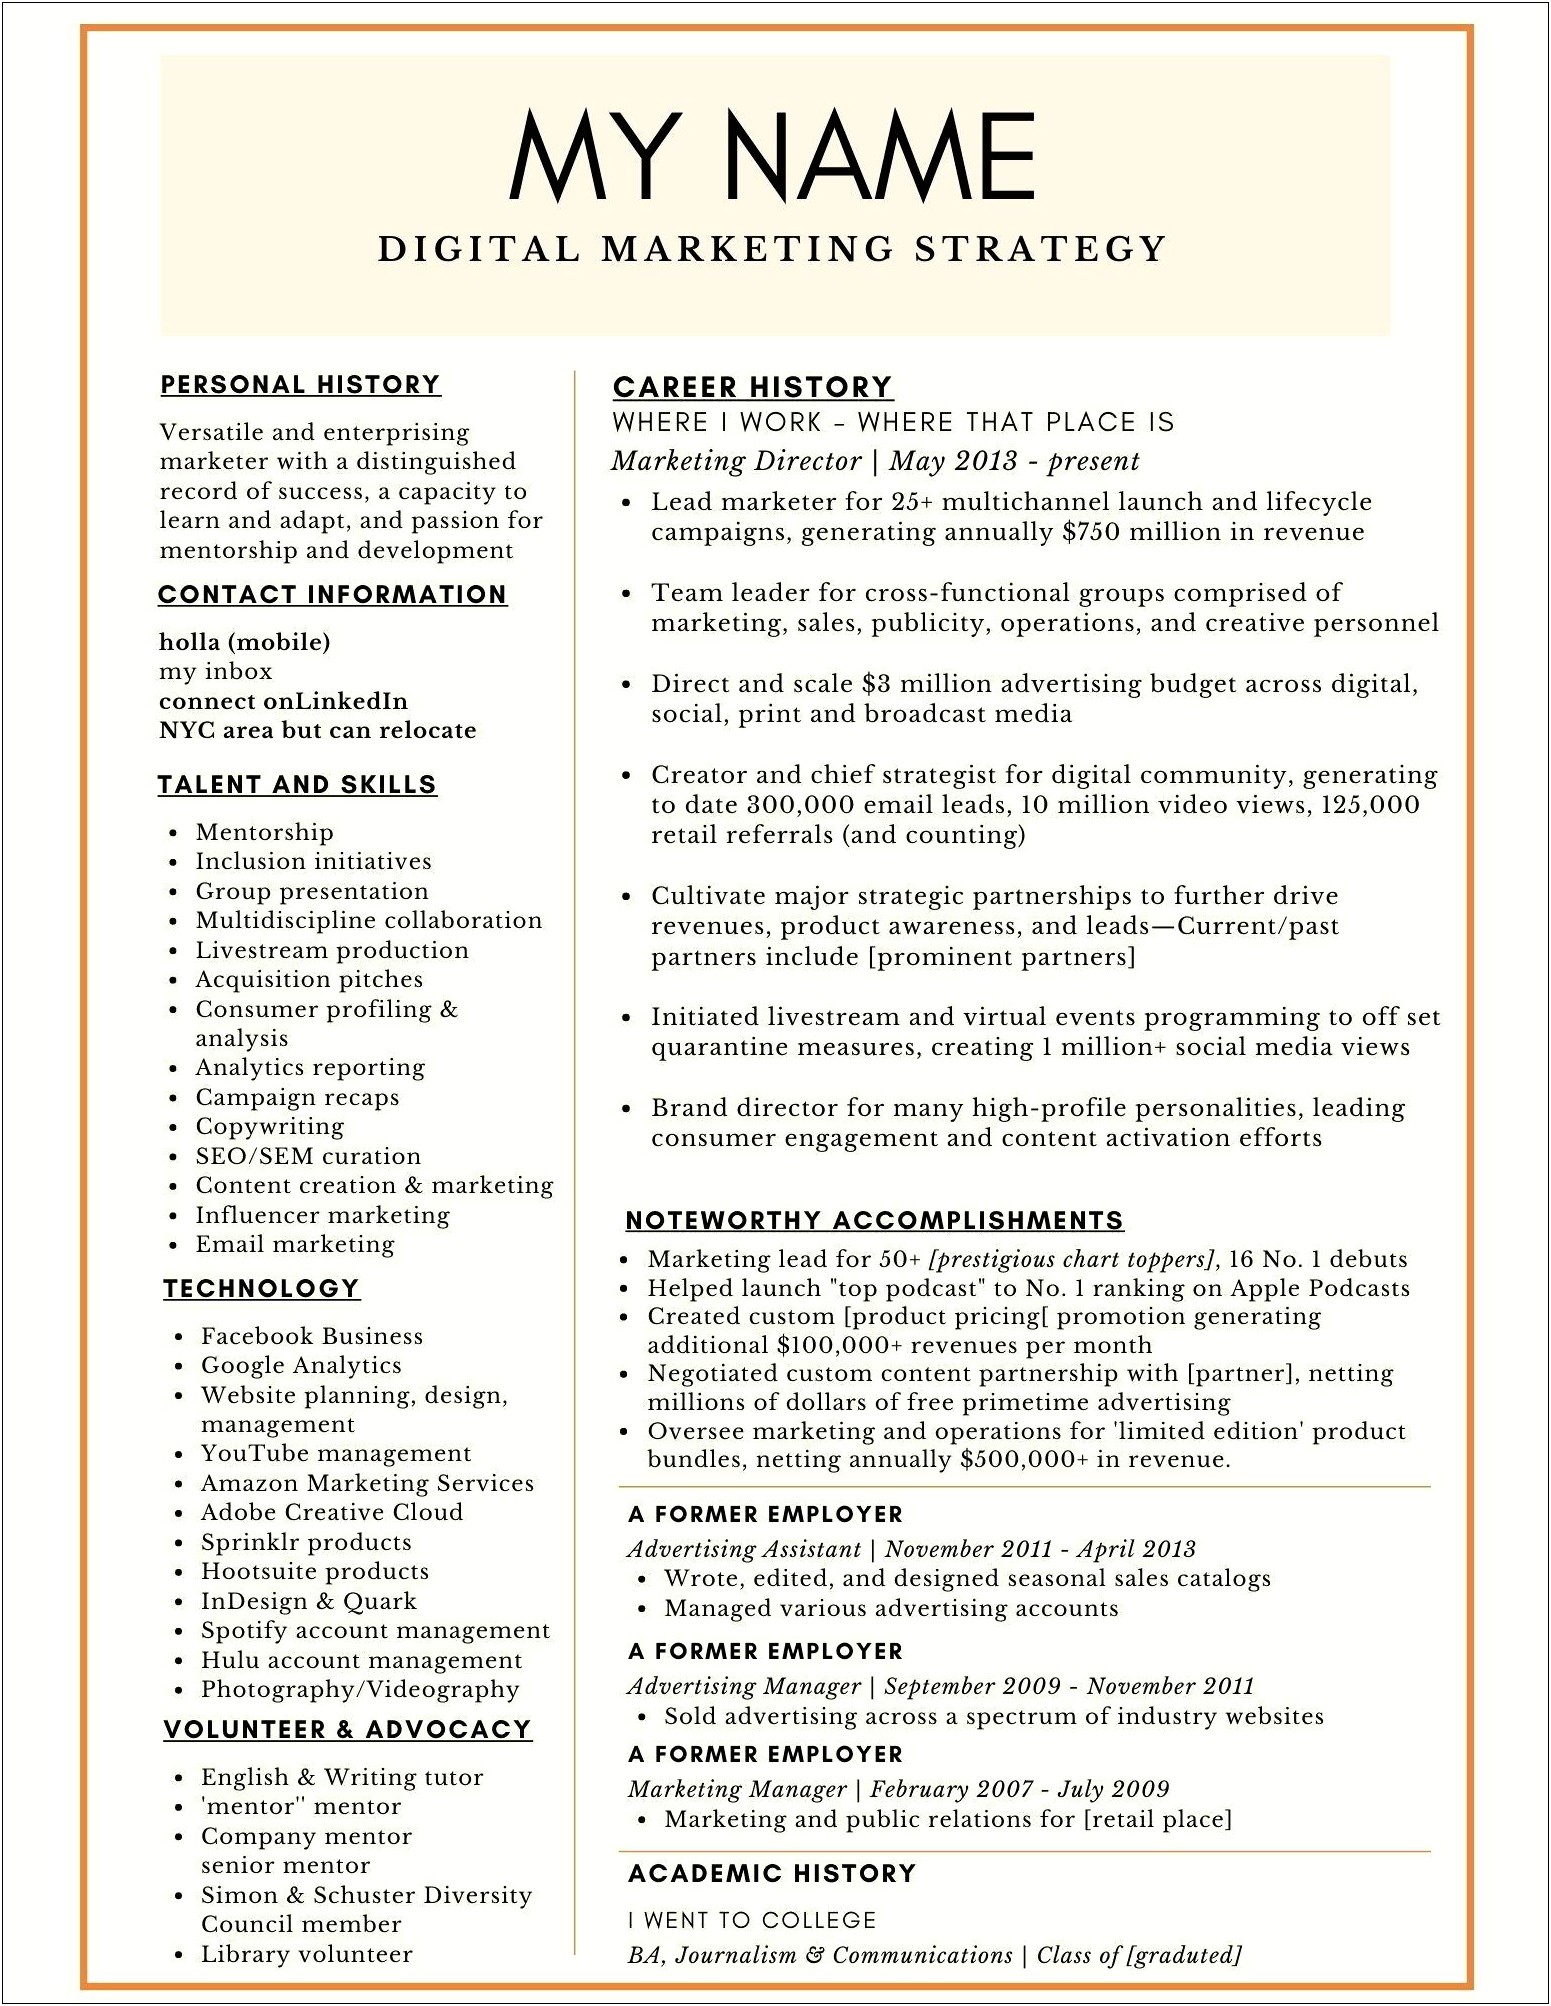 Digital Marketing Skills To Put On Resume